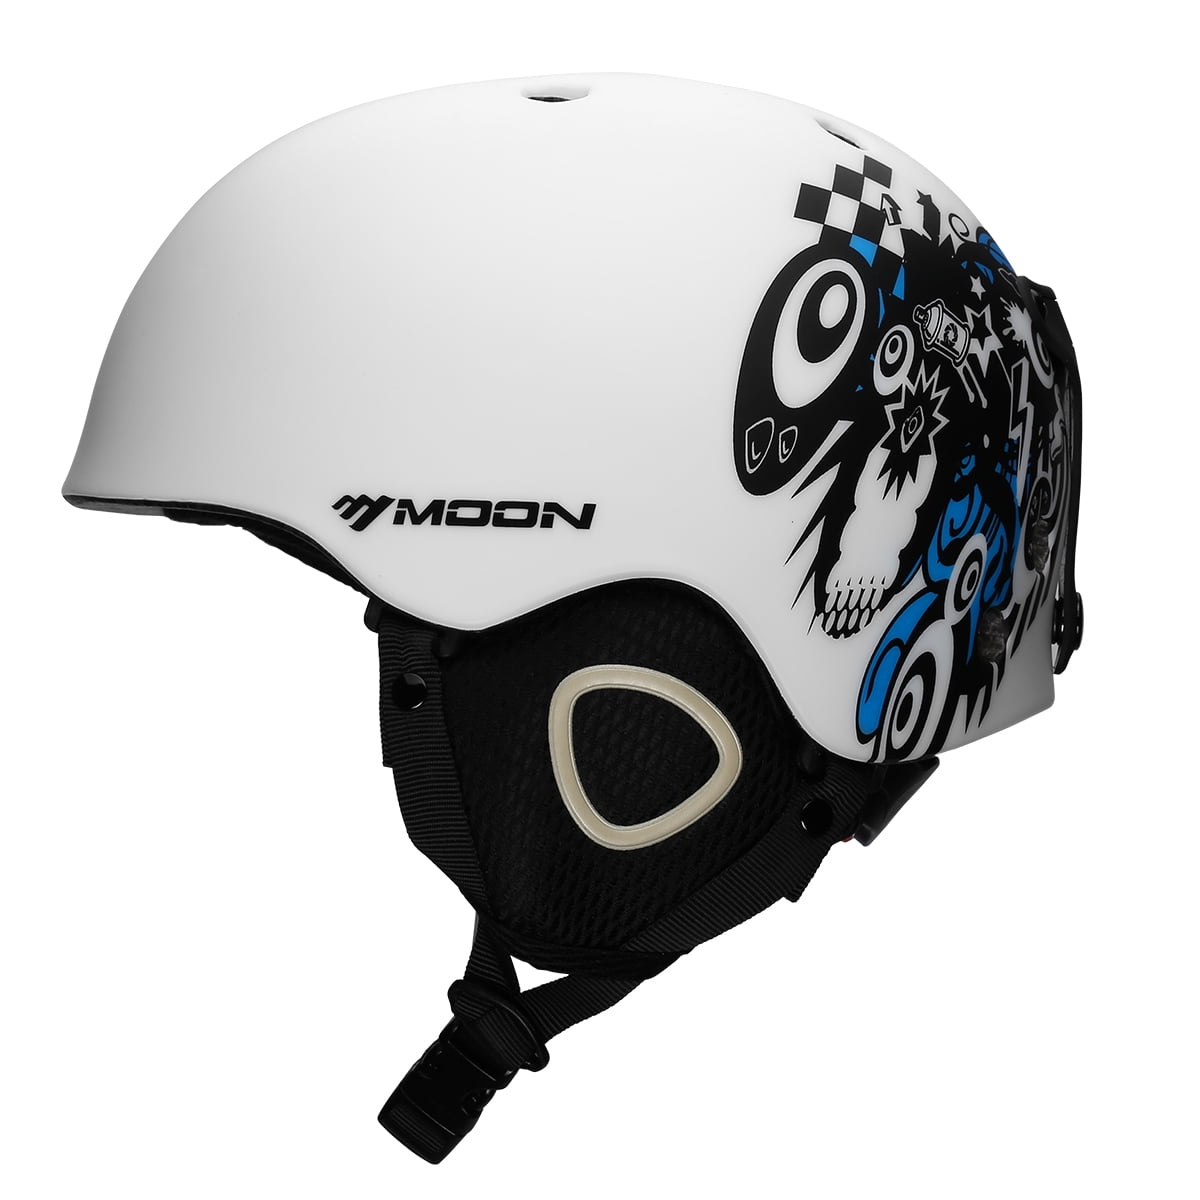 MOON Winter Skiing Helmet Adult Ski Snowboard Skateboard Safety Ski Helmets Men 